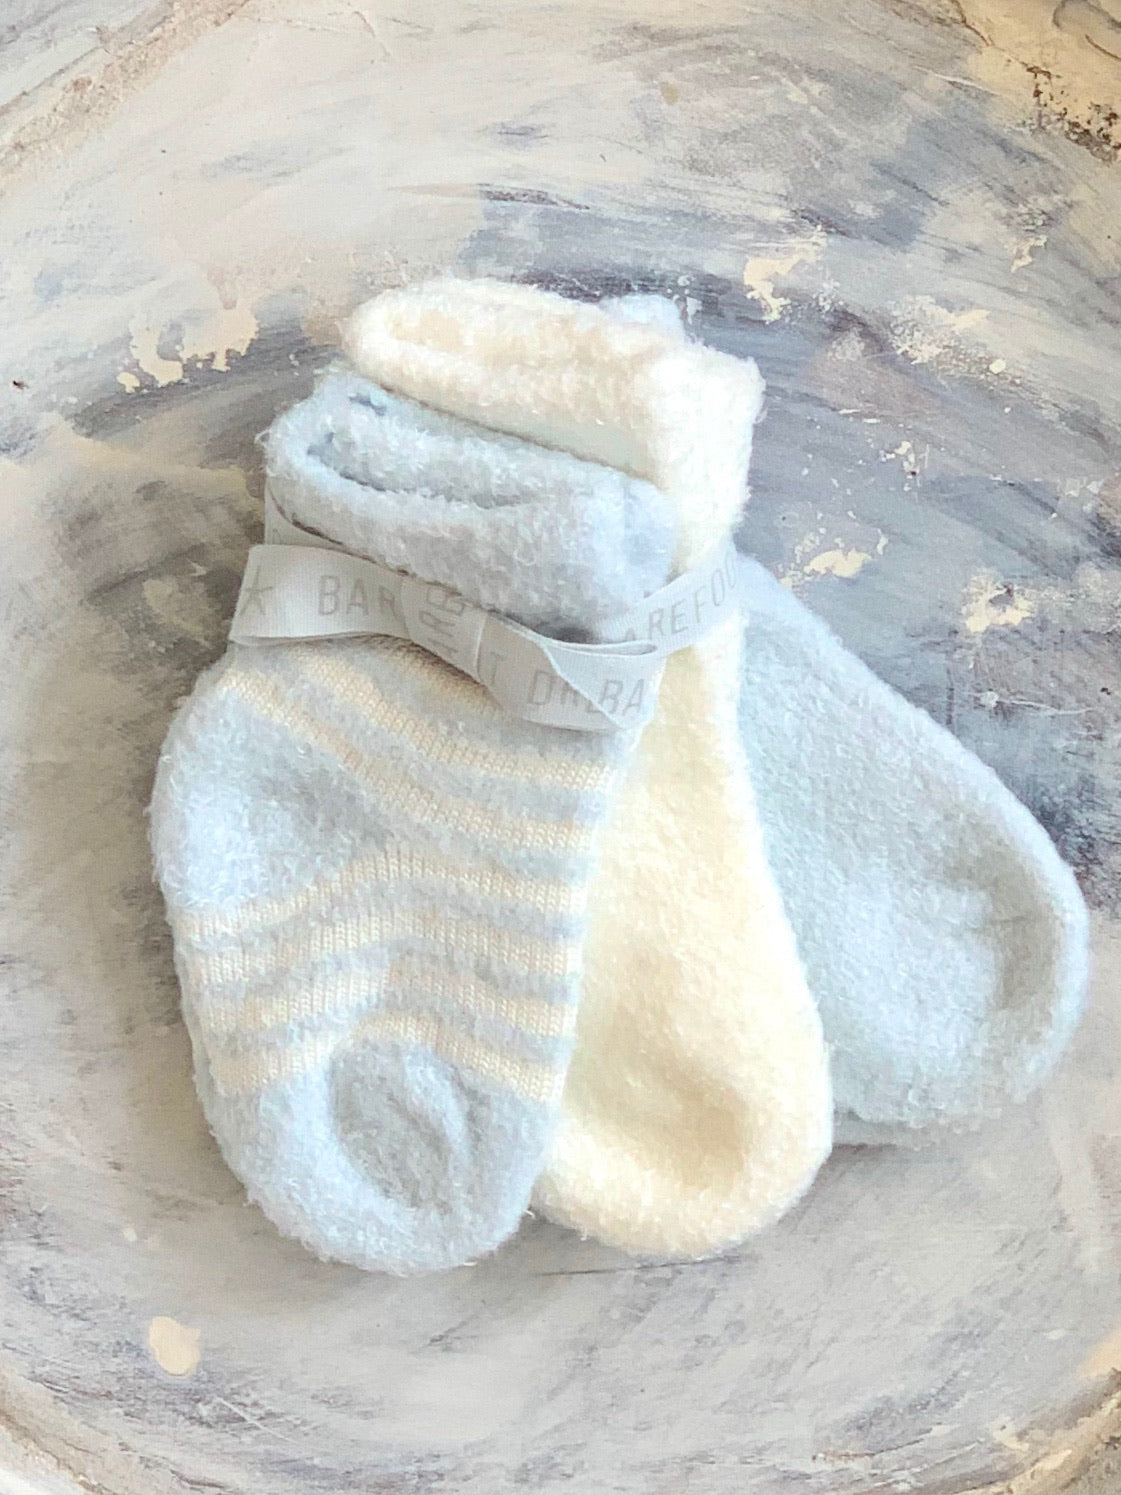 barefoot dreams baby socks